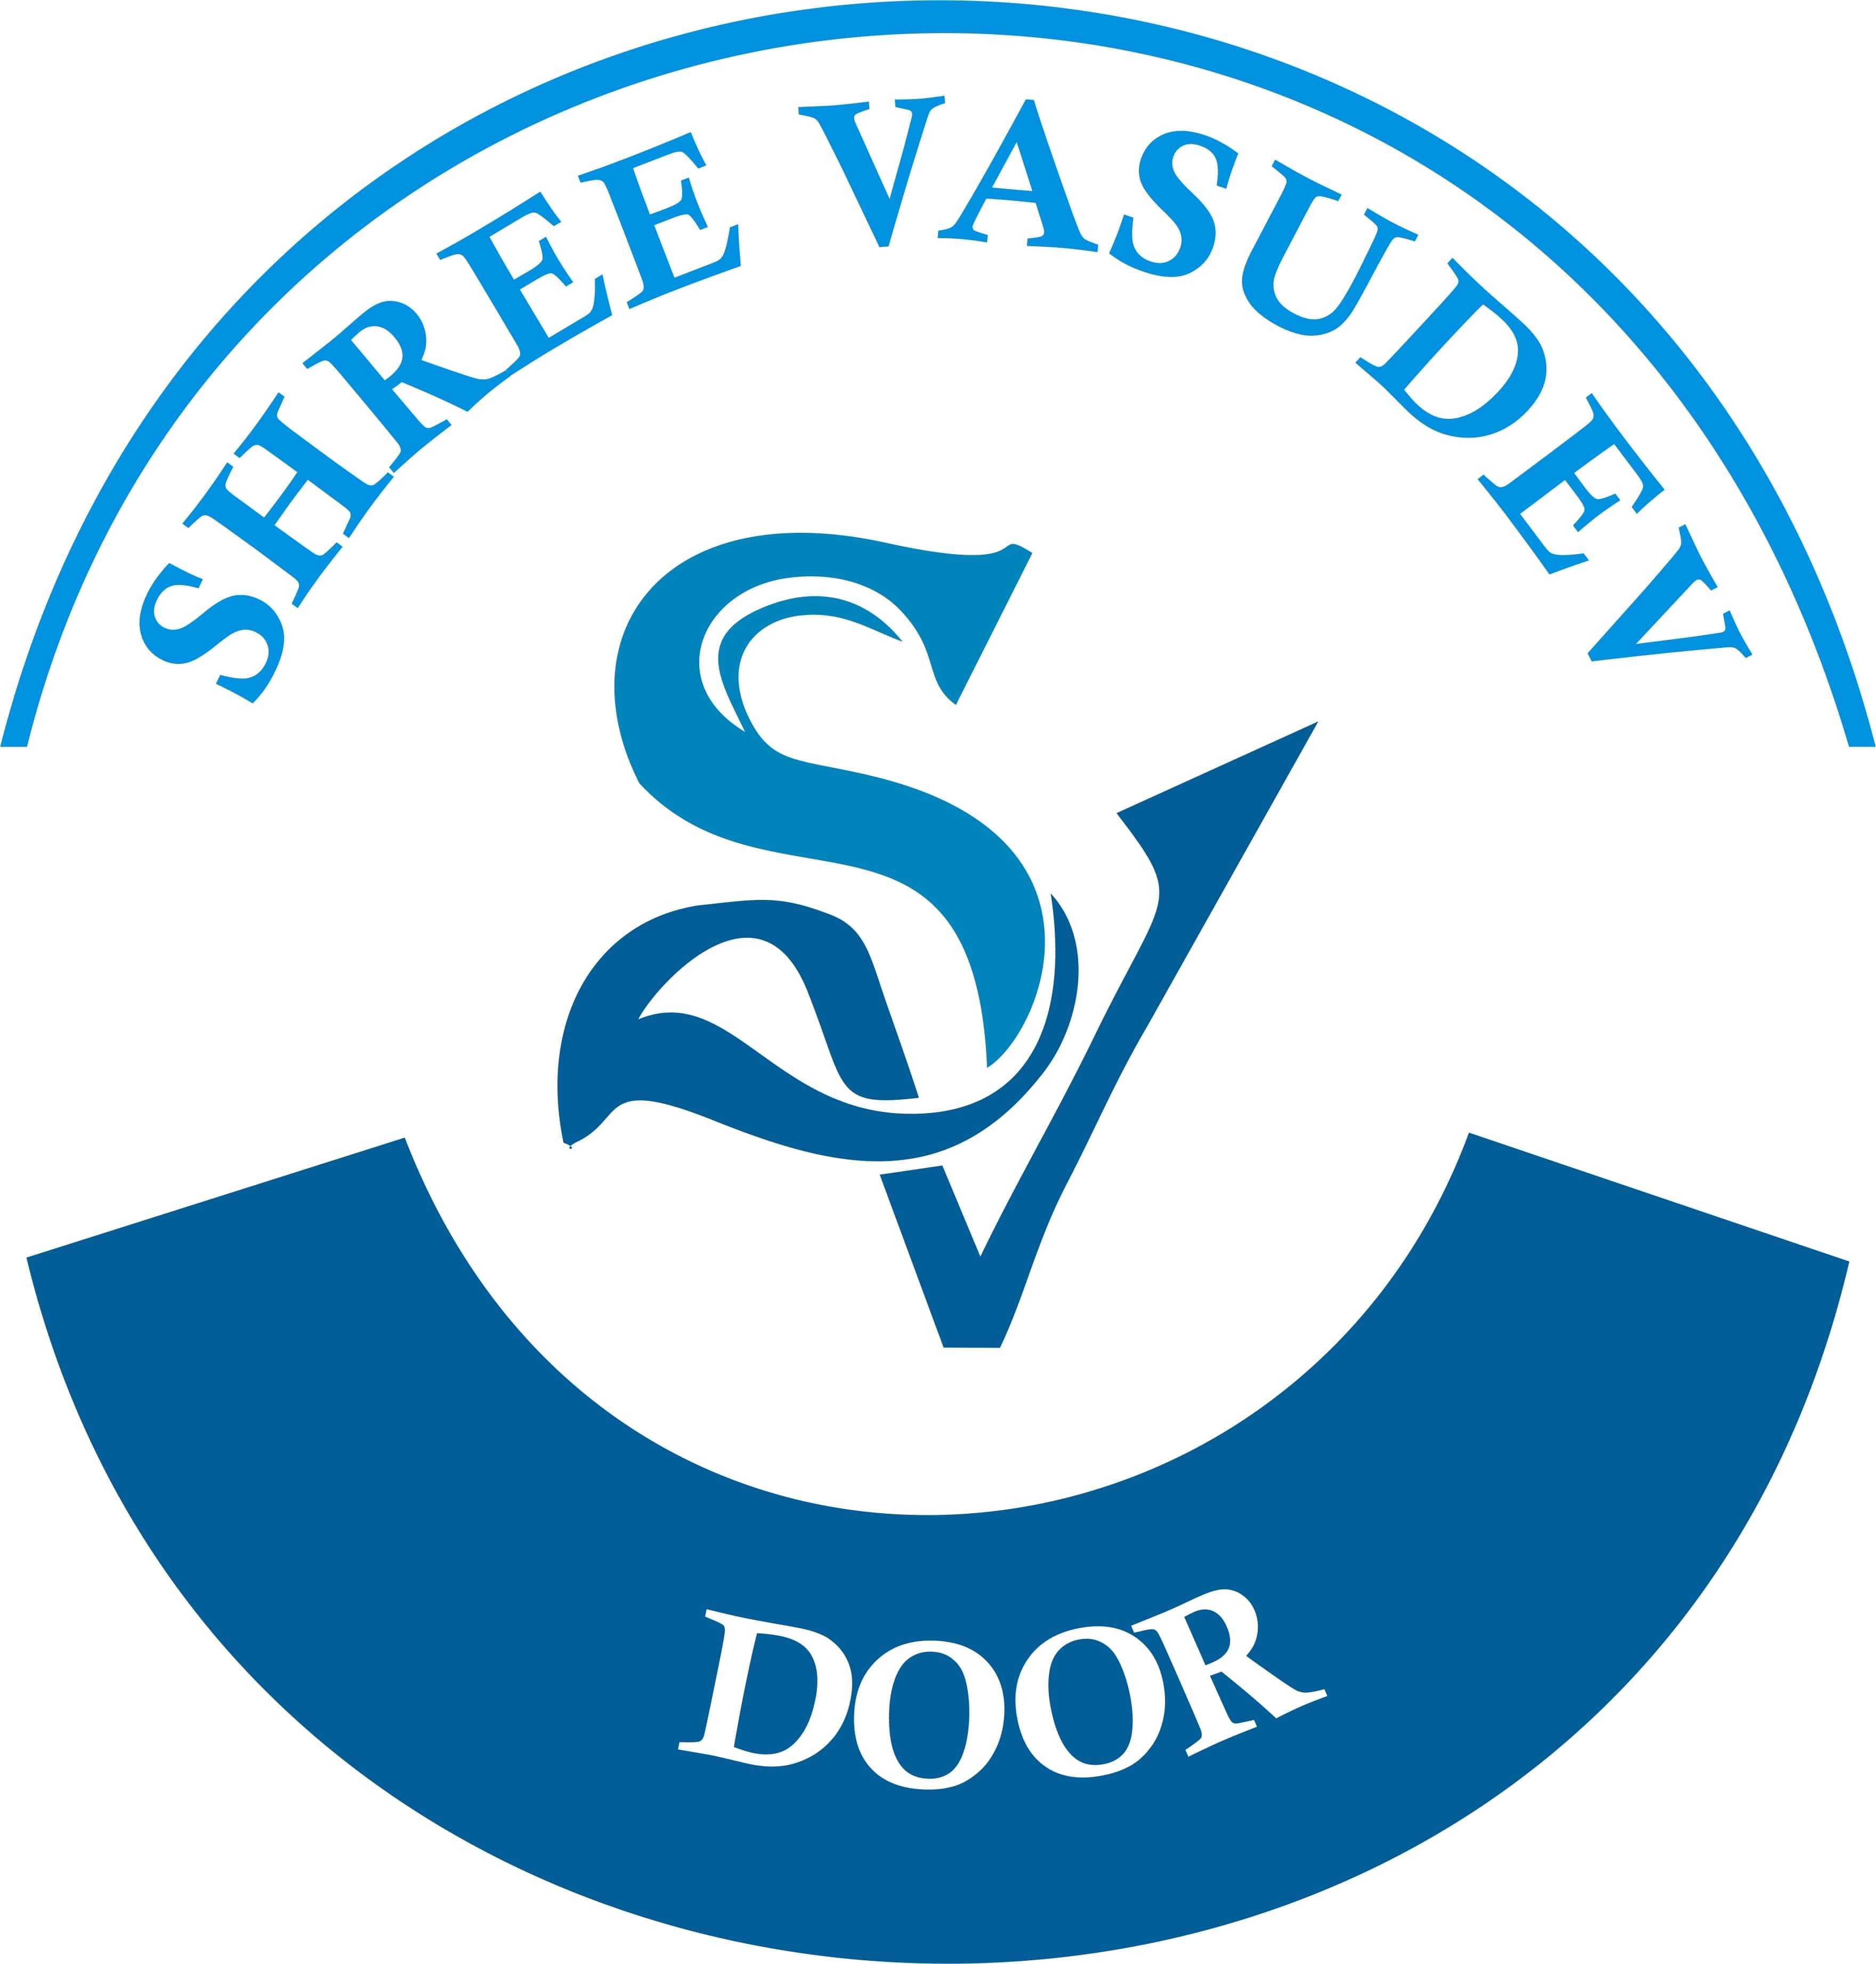 SHREE VASUDEV DOOR